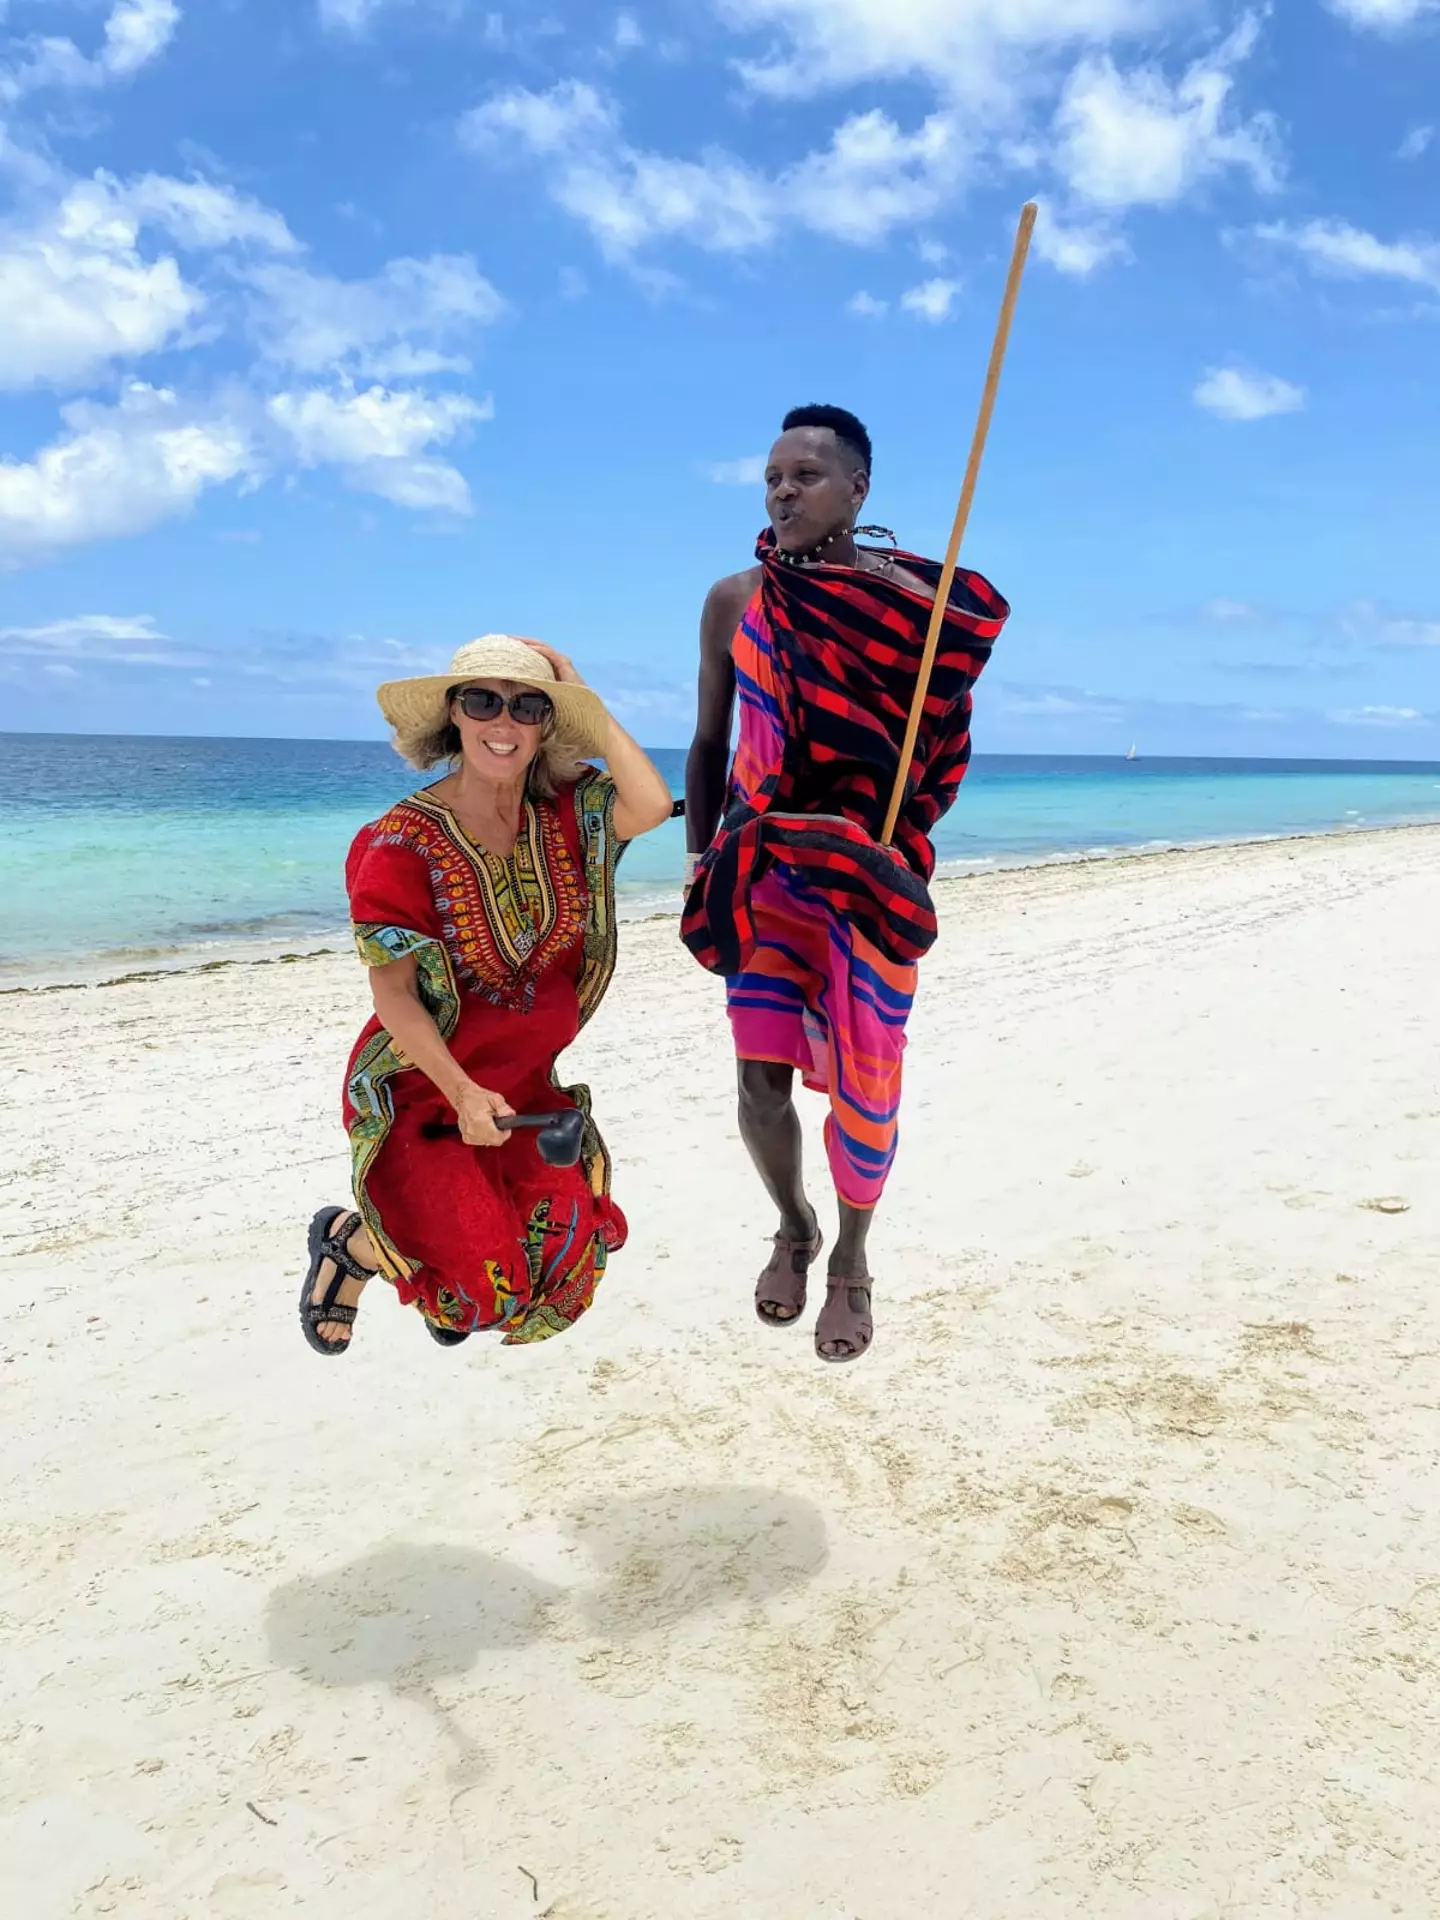 Deborah met Saitoty when she was traveling in Tanzania back in 2017.